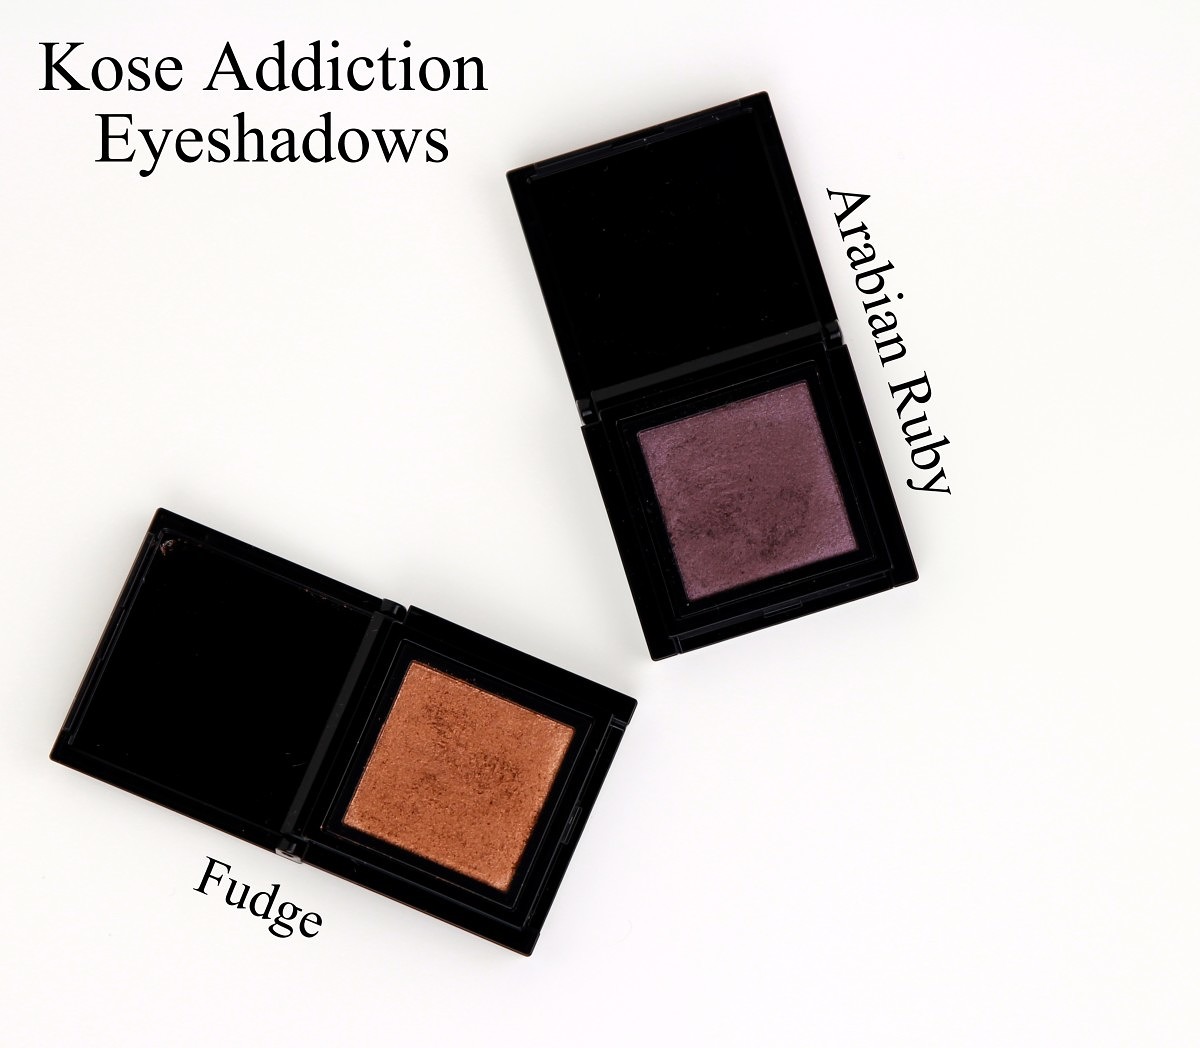 Kose Addiction Eyeshadows – First Impressions